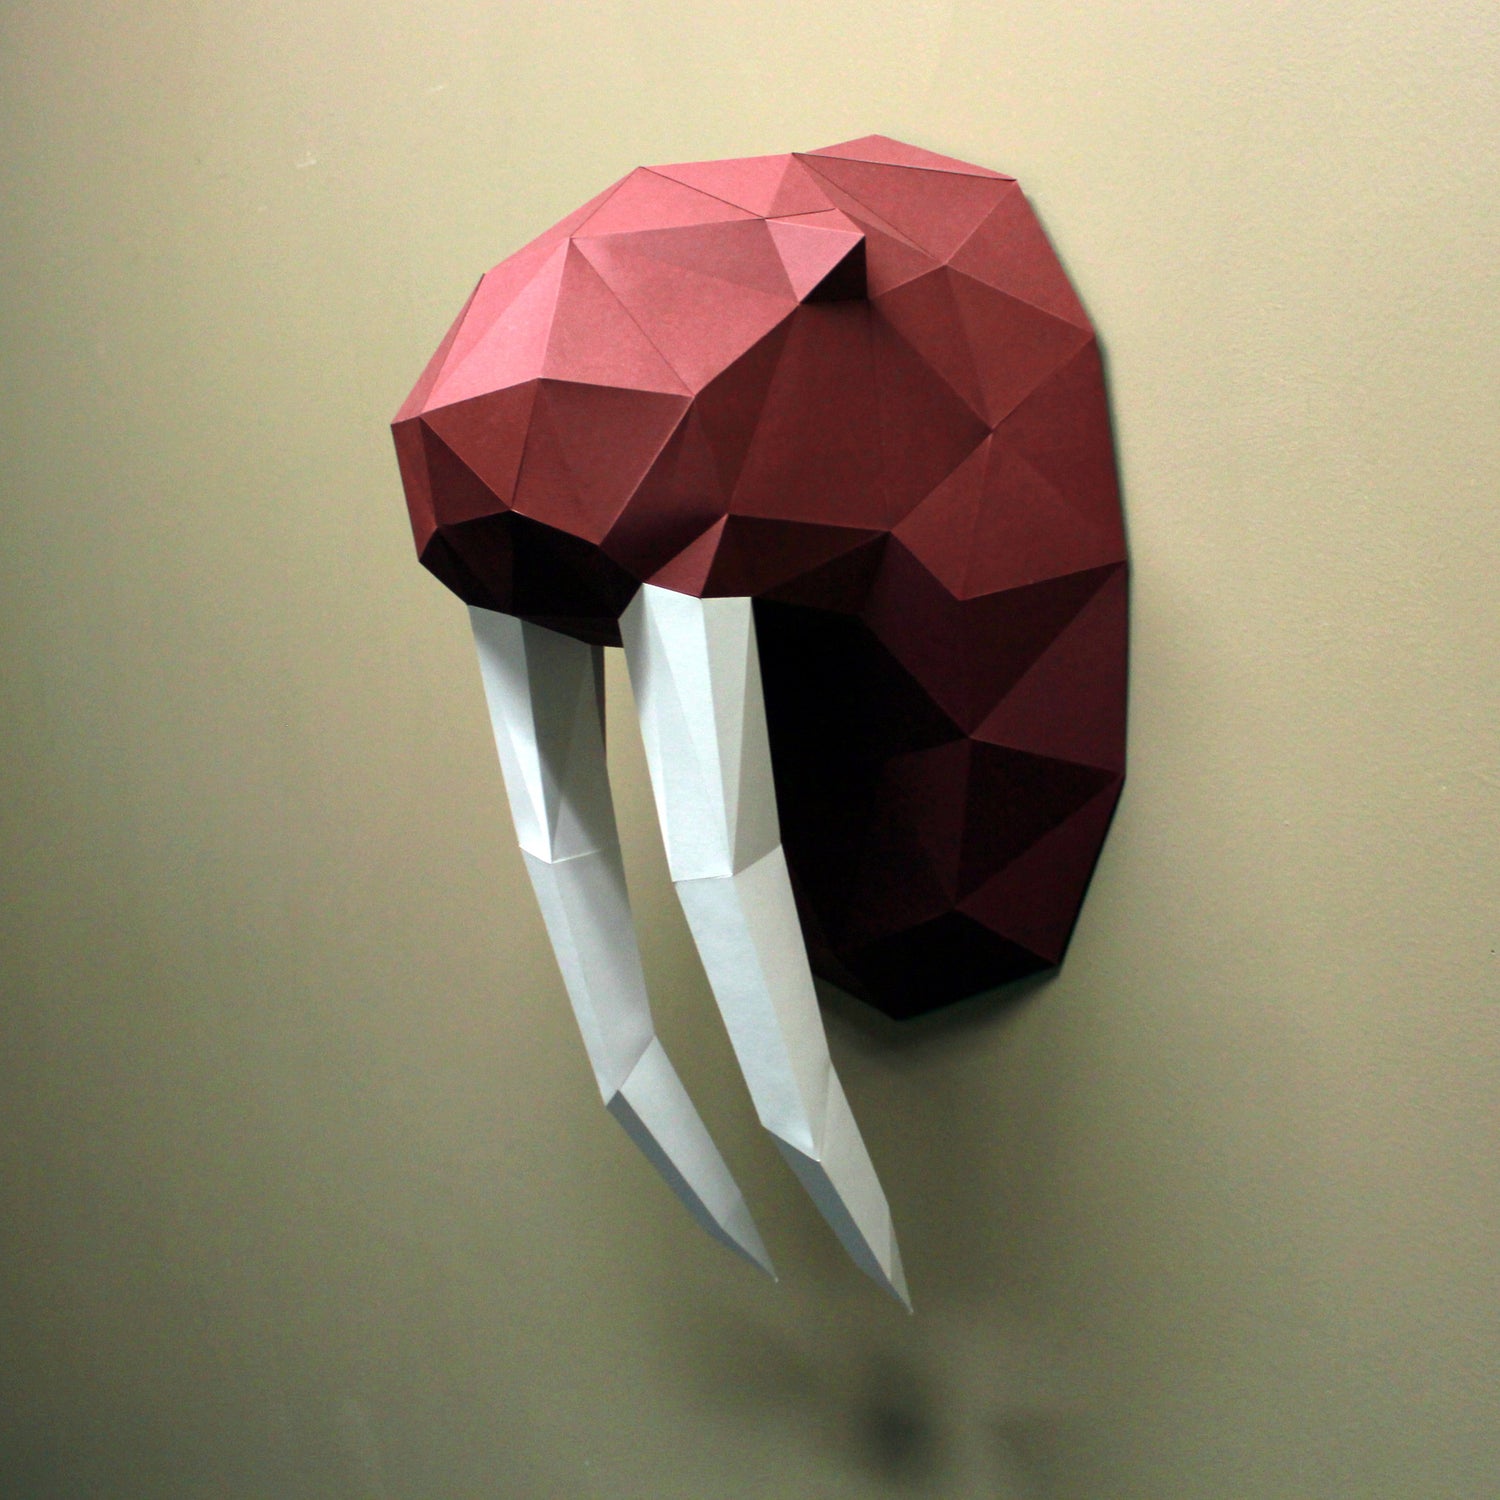 Walrus Paper Animal Sculpture 